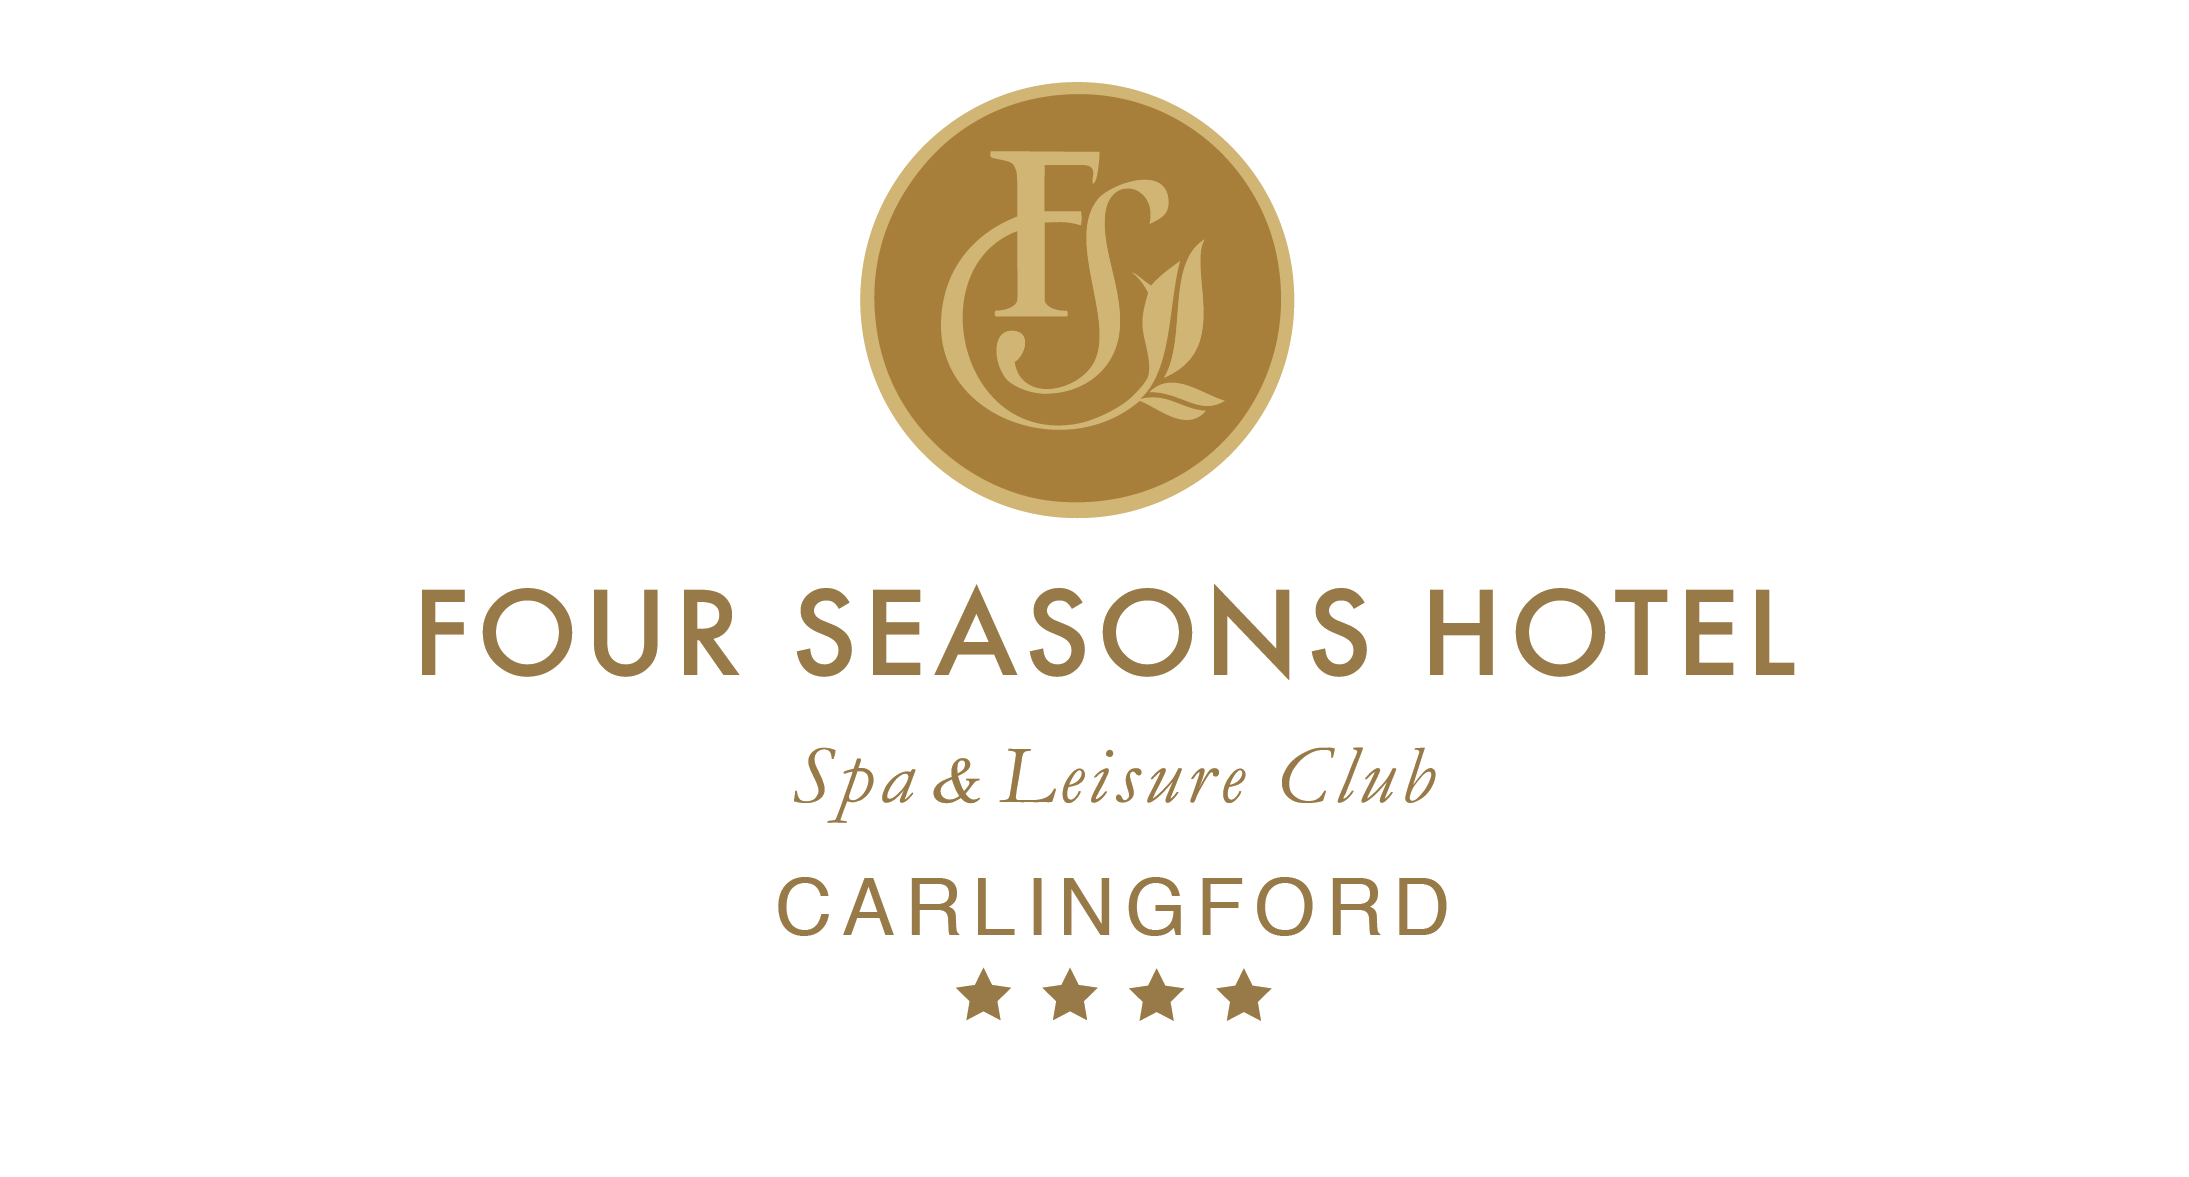 Four Seasons Hotel, centro termale e ricreativo, Carlingford Logo 1